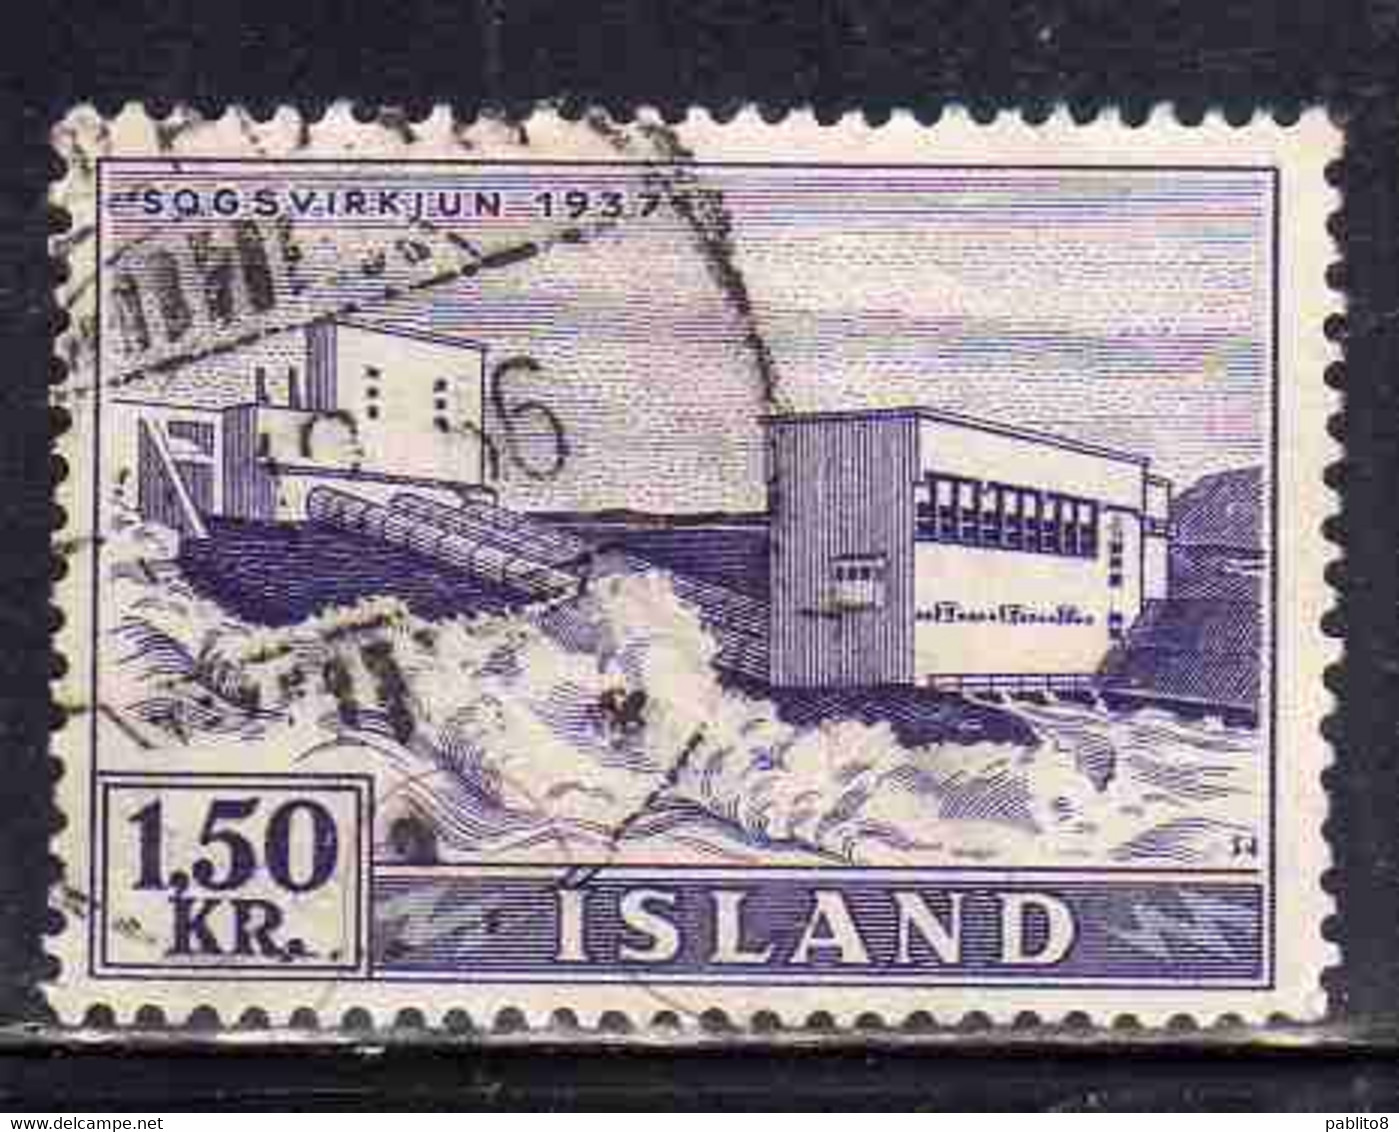 ISLANDA ICELAND ISLANDE 1956 WATERFALLS SOGS 1.50k USED USATO OBLITERE' - Luftpost